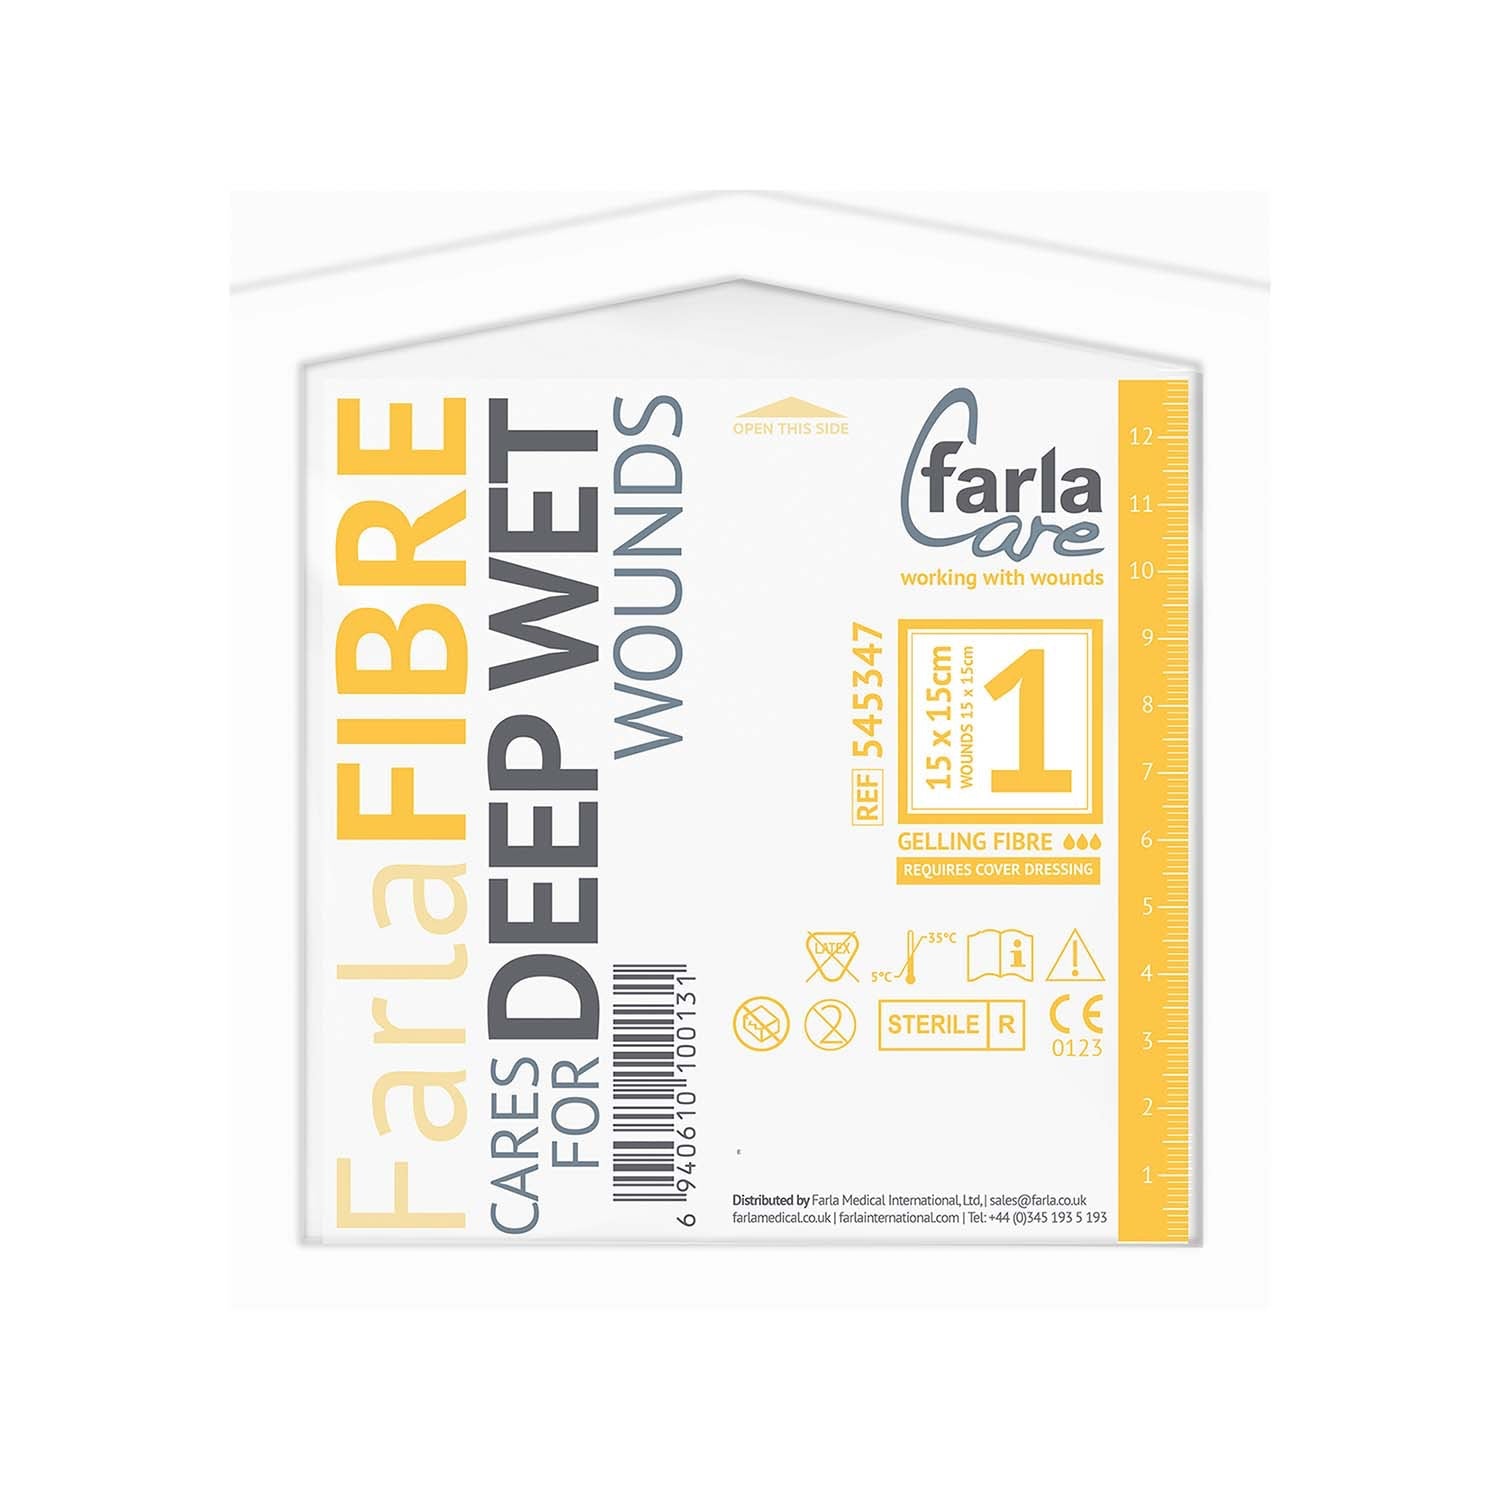 FarlaFIBRE Gelling Fibre | 15 x 15cm | Pack of 5 | Short Expiry Date (2)